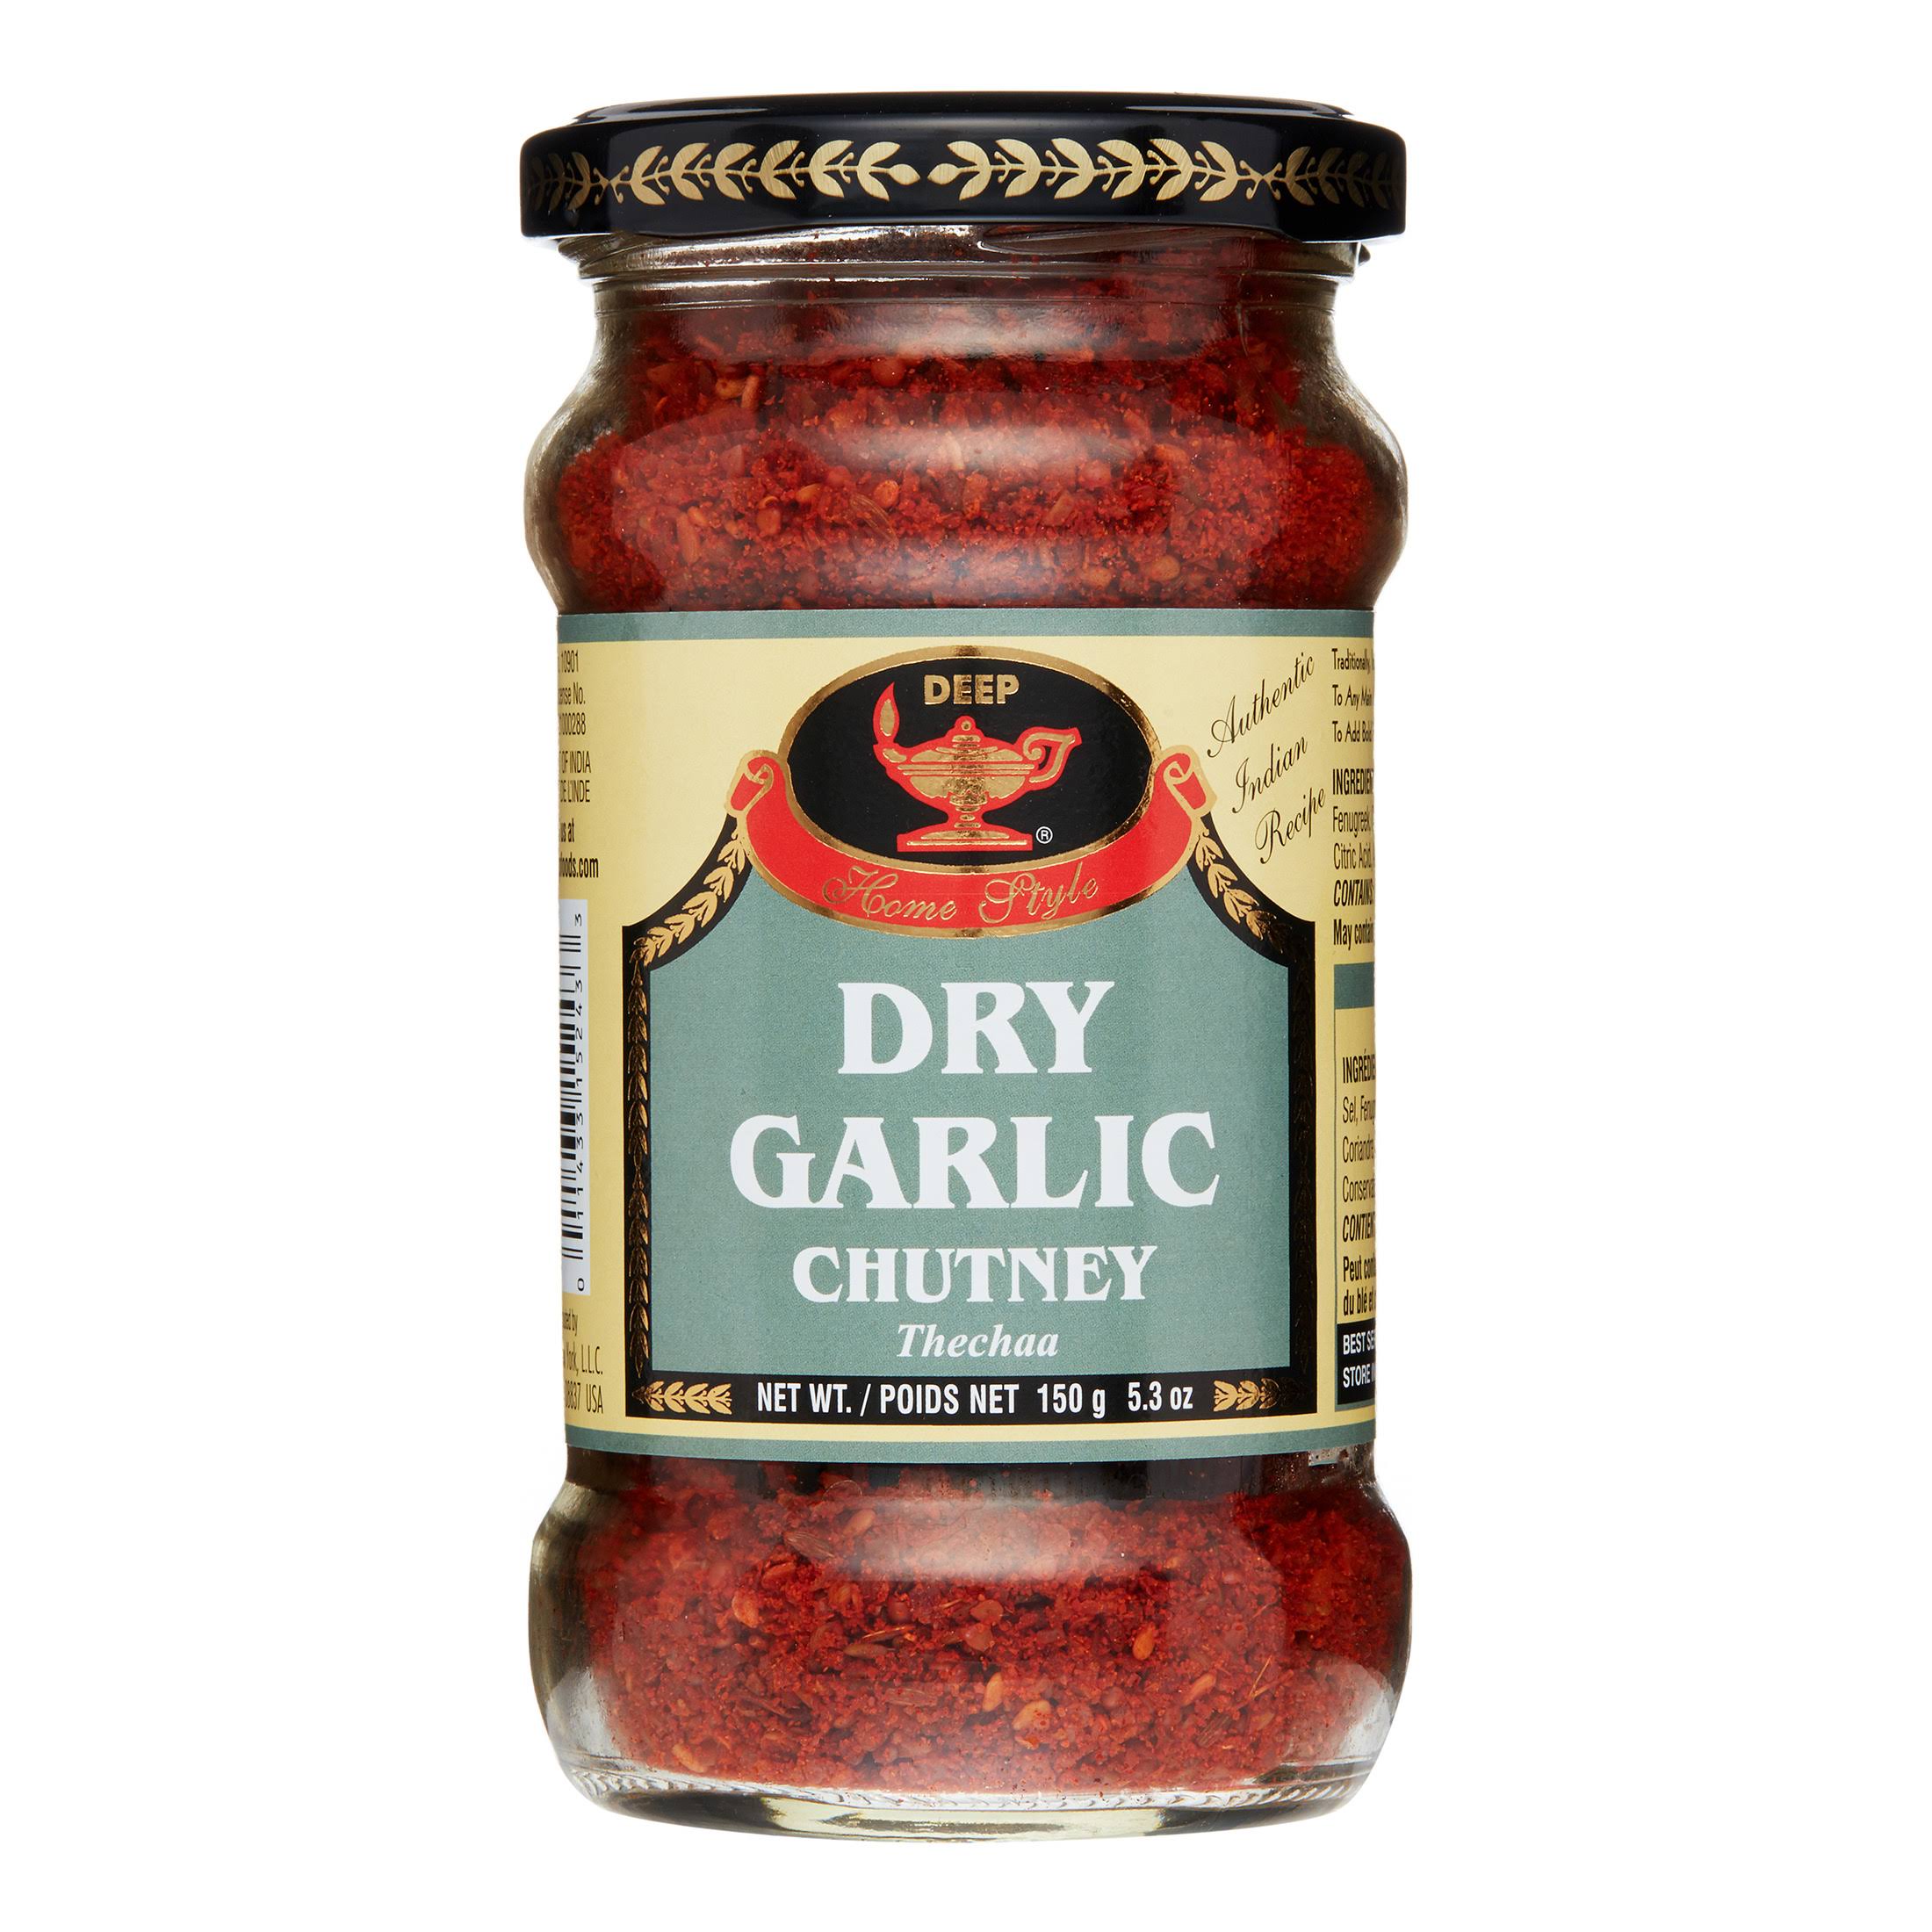 Dry Garlic Chutney 150g - Deep